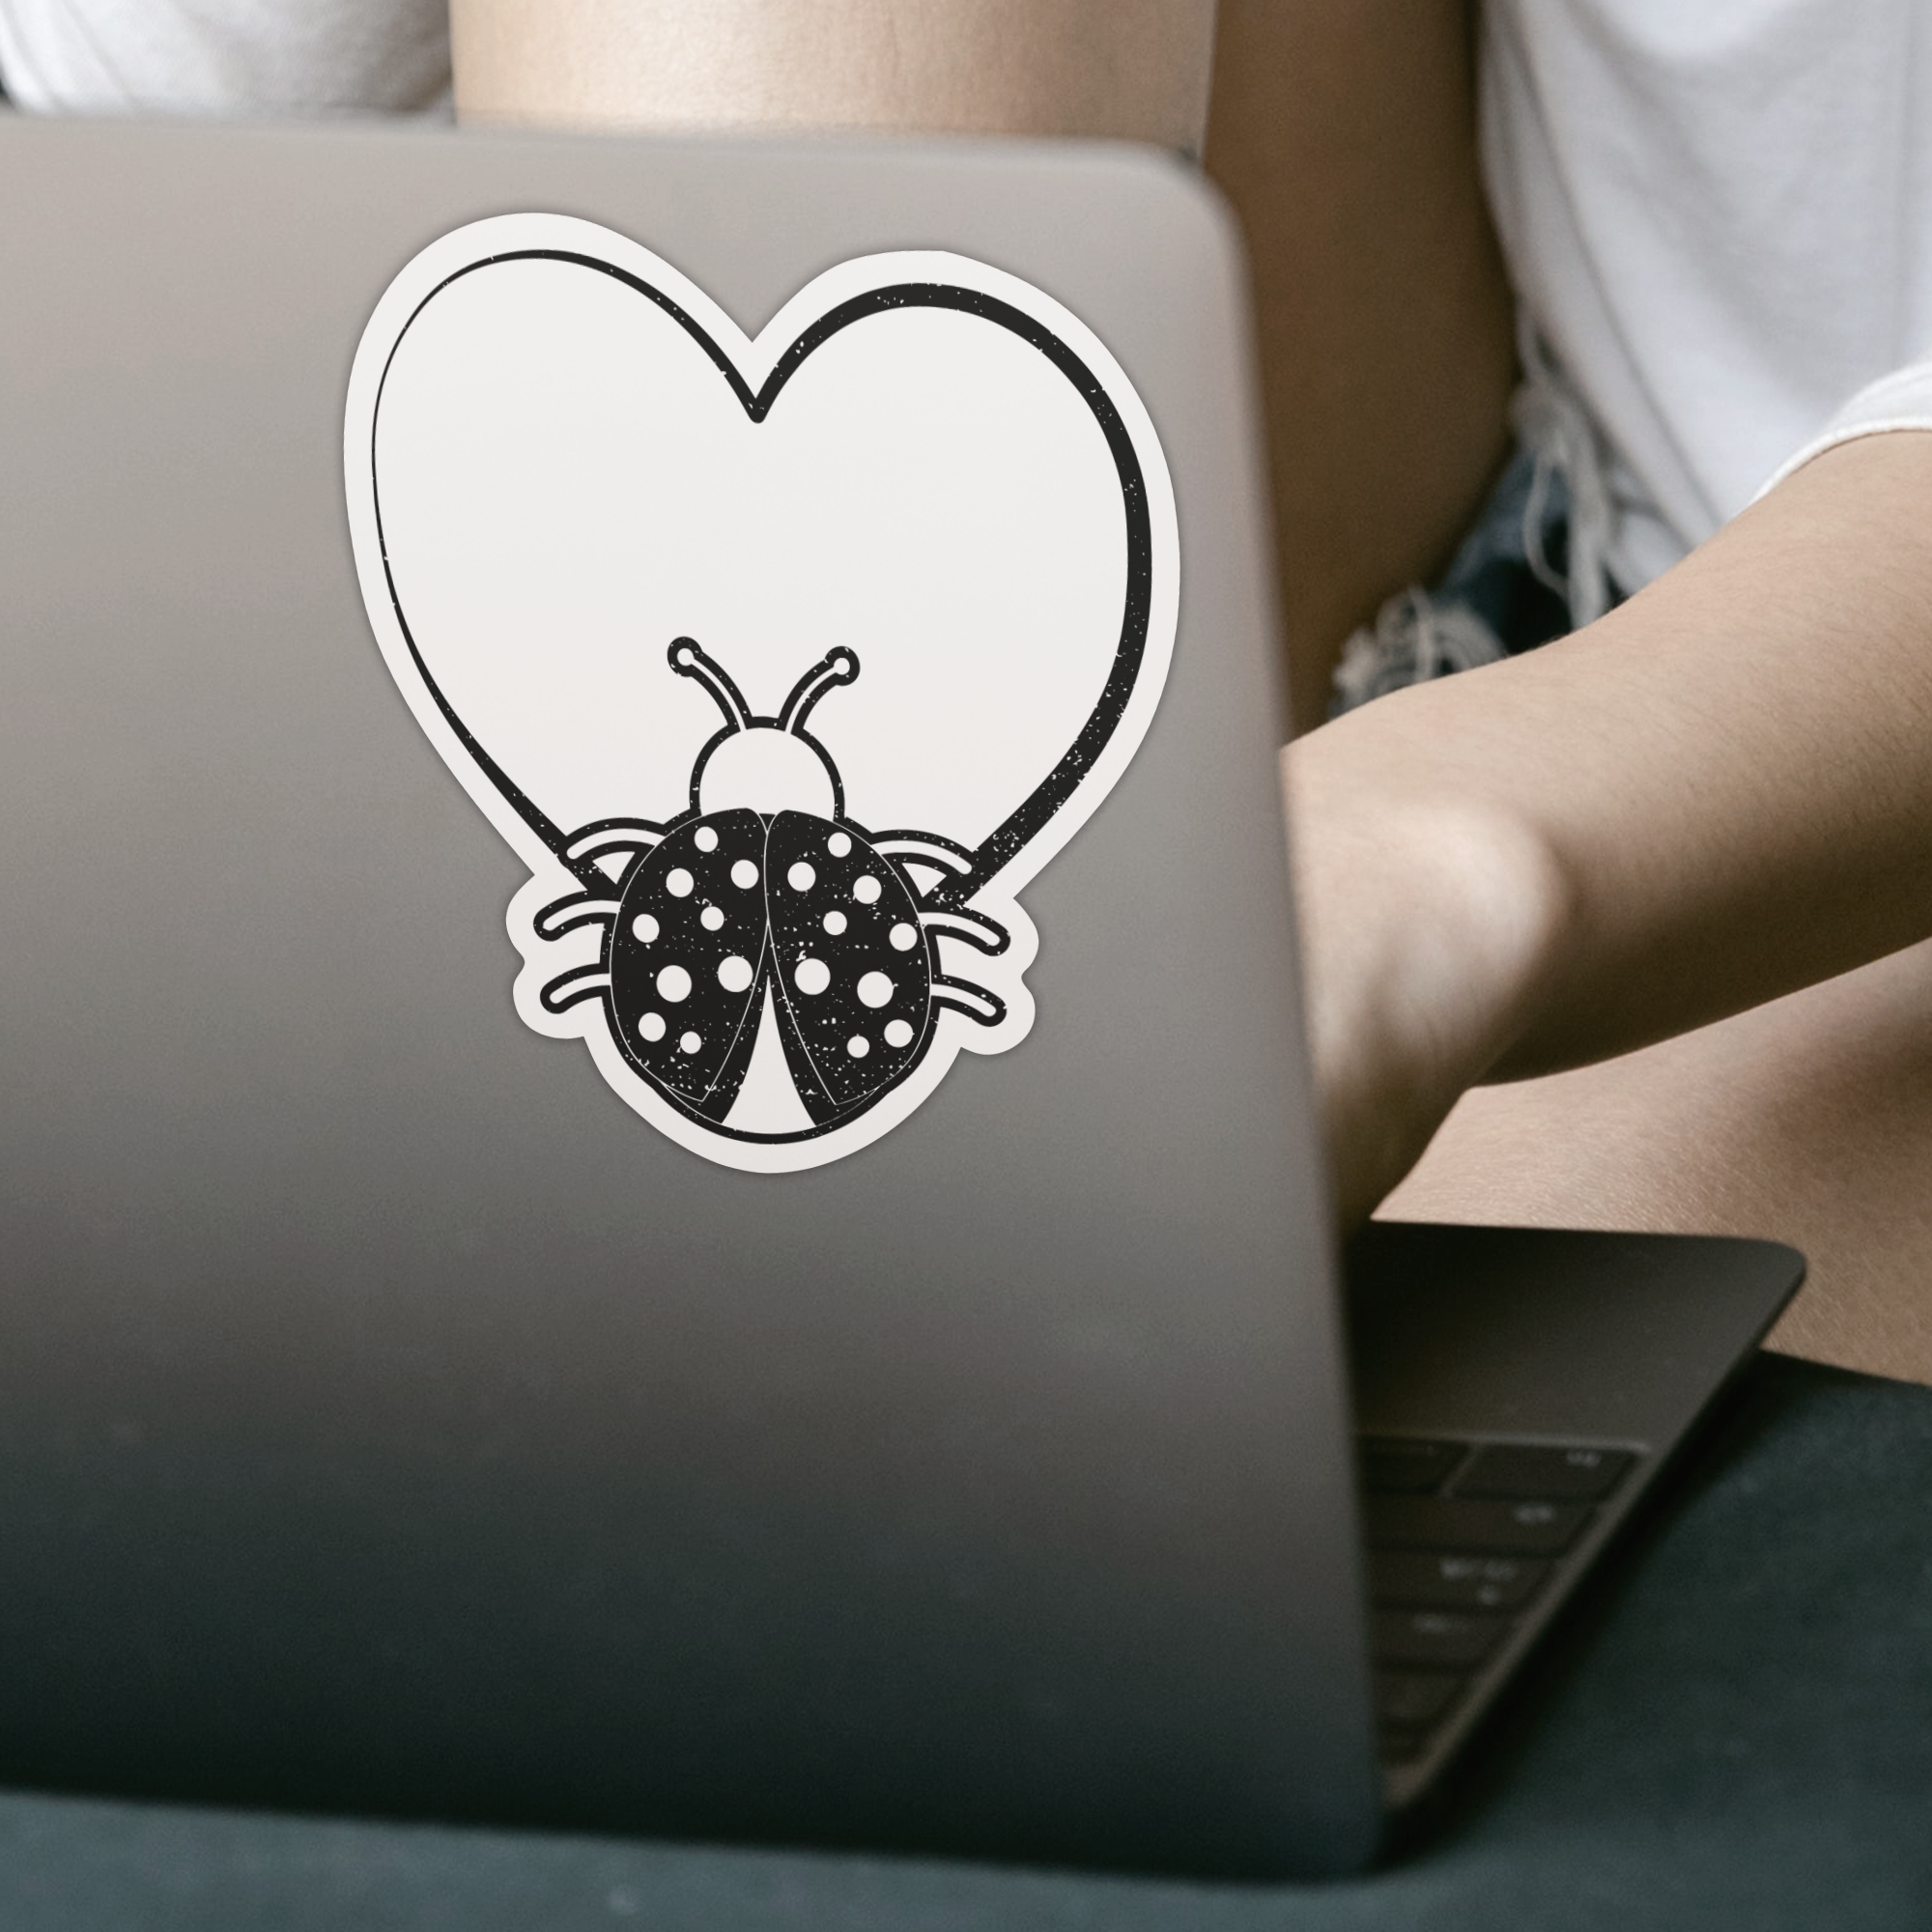 Ladybug Sticker - DESIGNSBYJNK5.COM